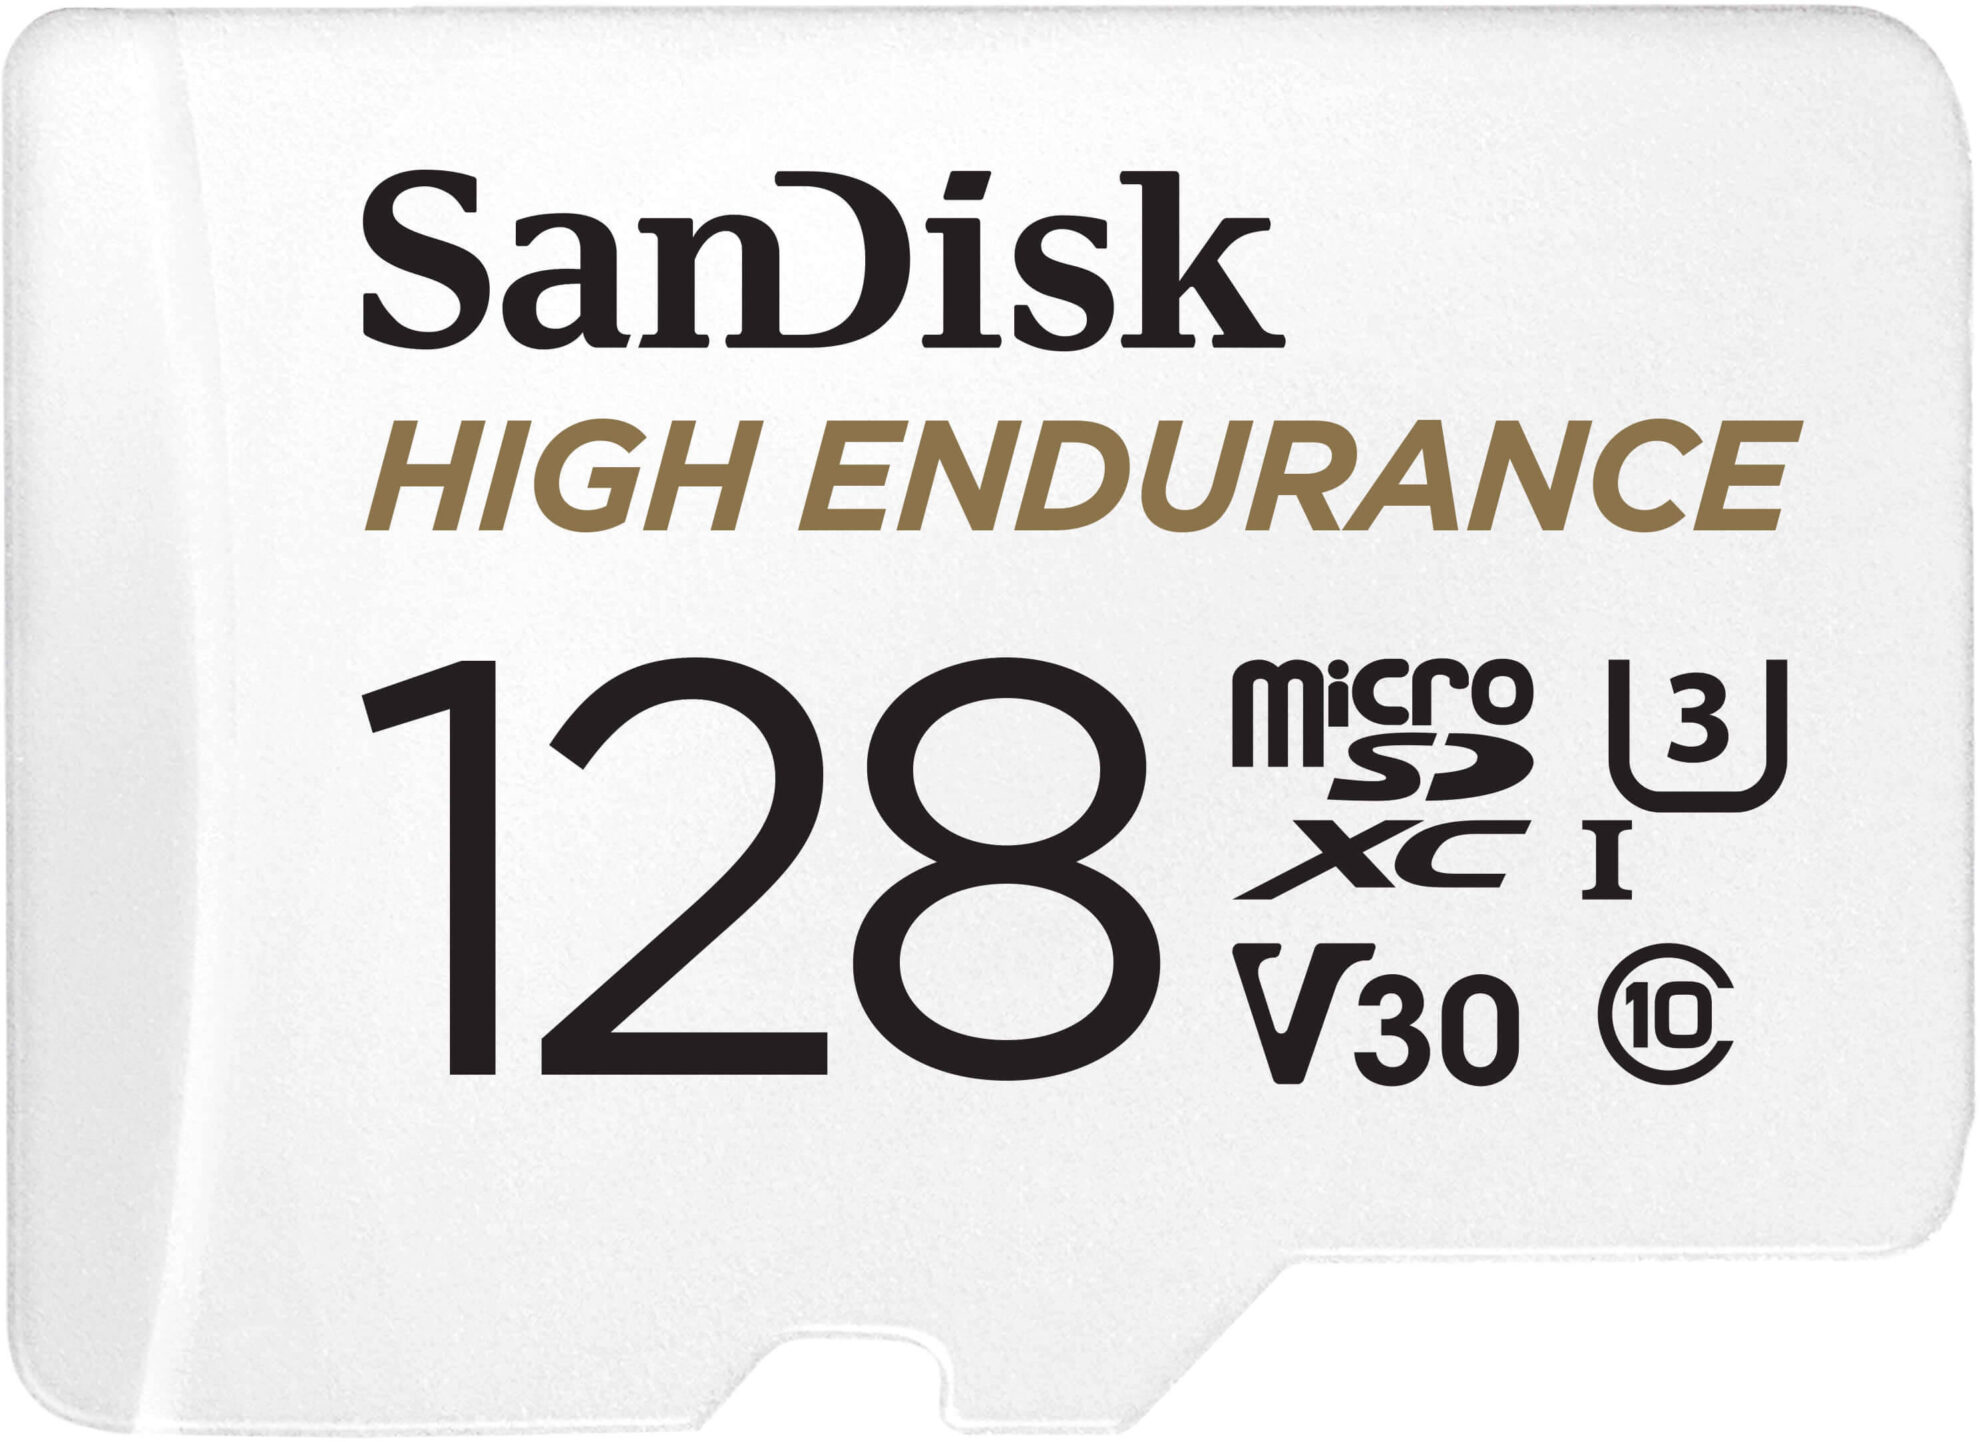 SanDisk High Endurance microSDXC muistikortti 128 Gt